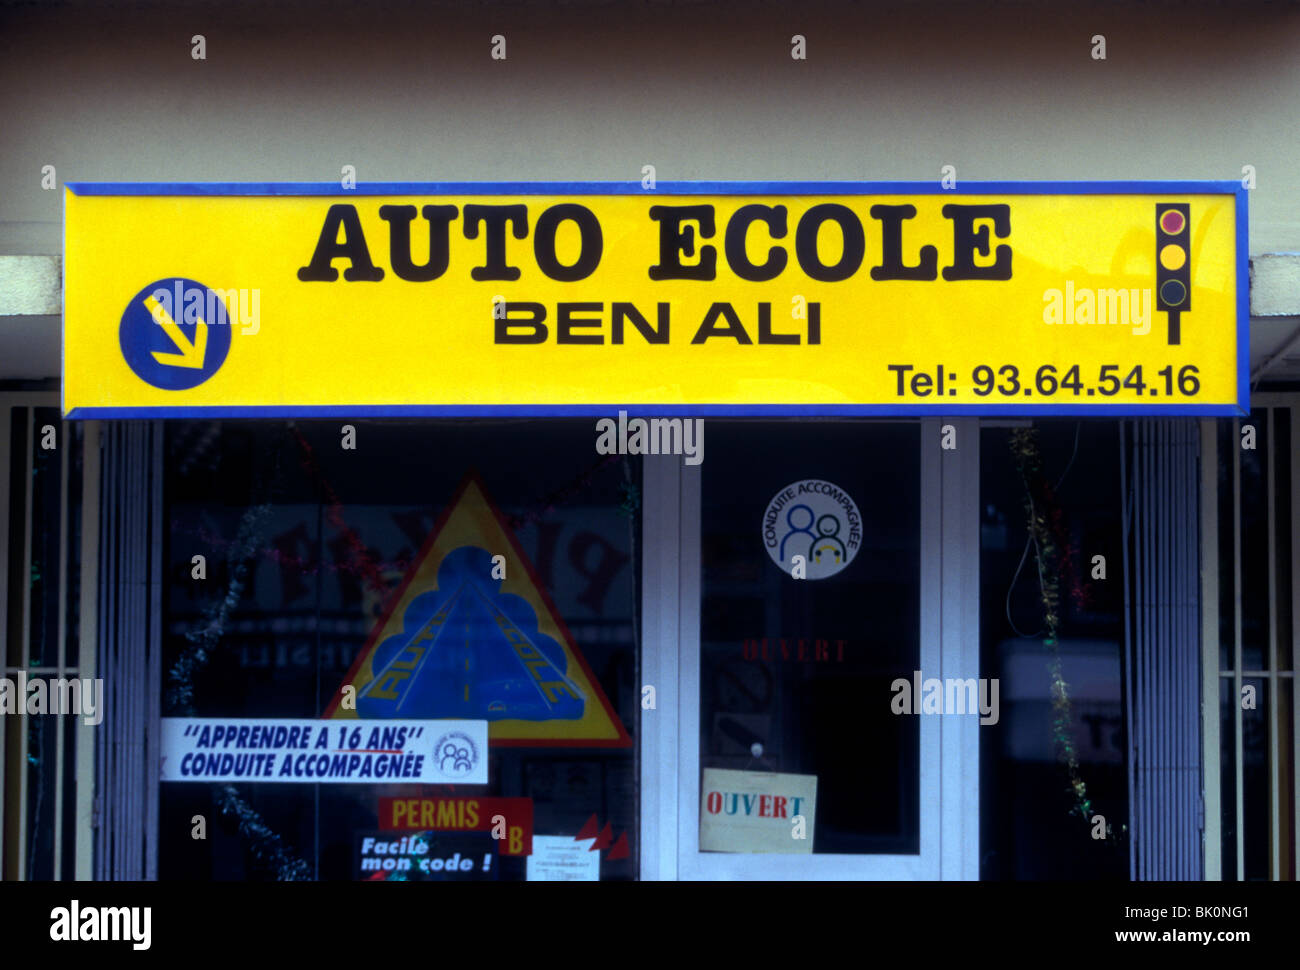 French language sign, driver education class, auto school, auto ecole de conduite, auto ecole, Ben Ali, town of Vallauris, Vallauris, France, Europe Stock Photo